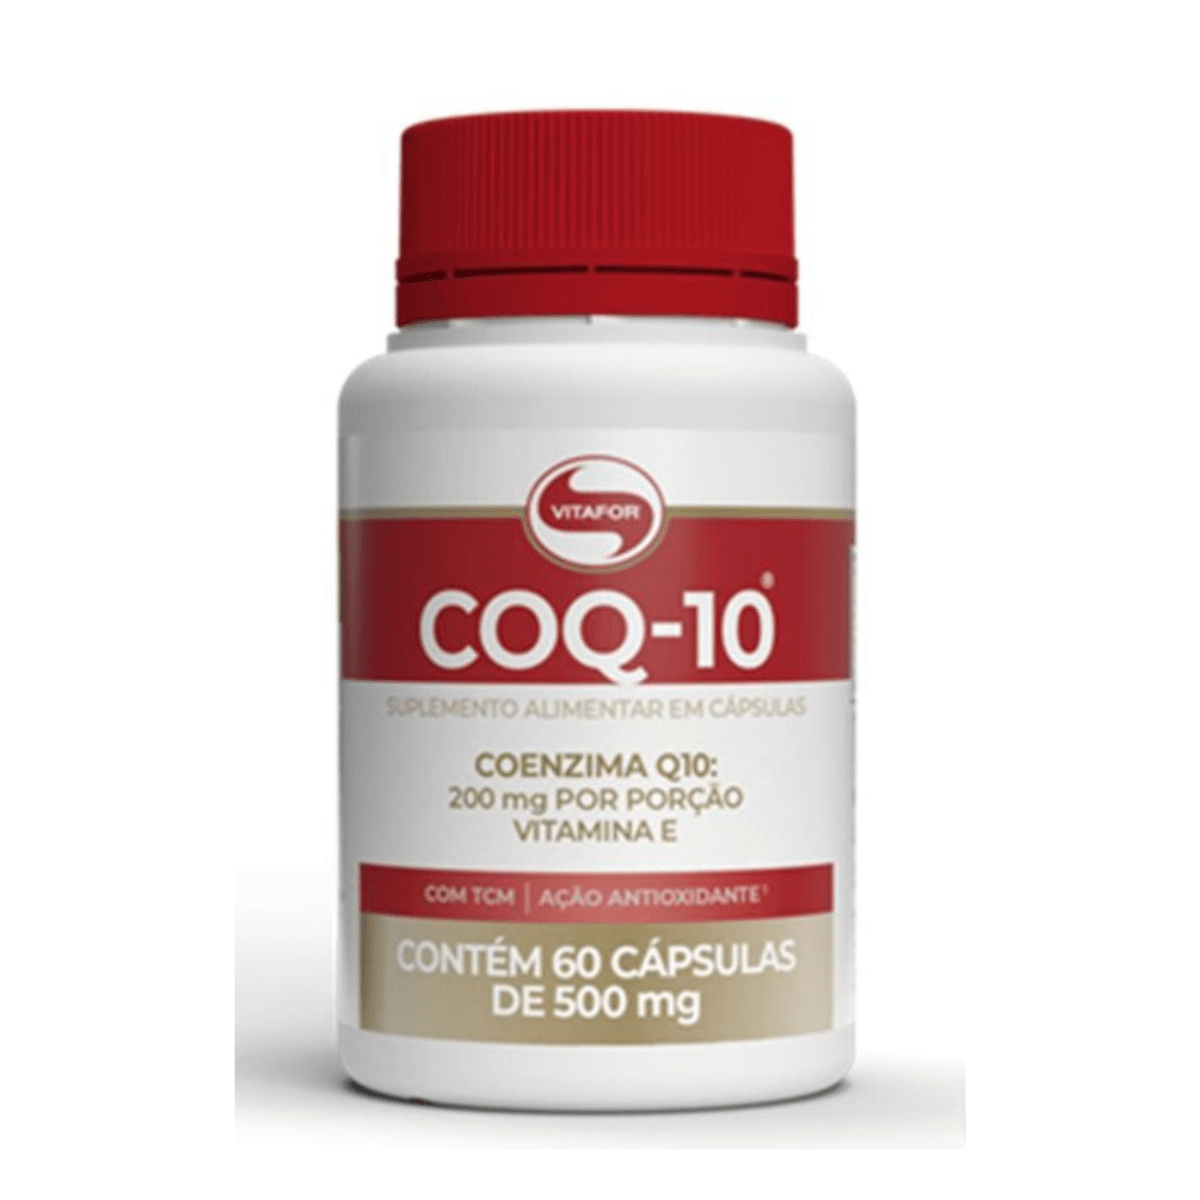 COQ-10 - COENZIMA Q10 200mg - 60 CAPSULAS - VITAFOR